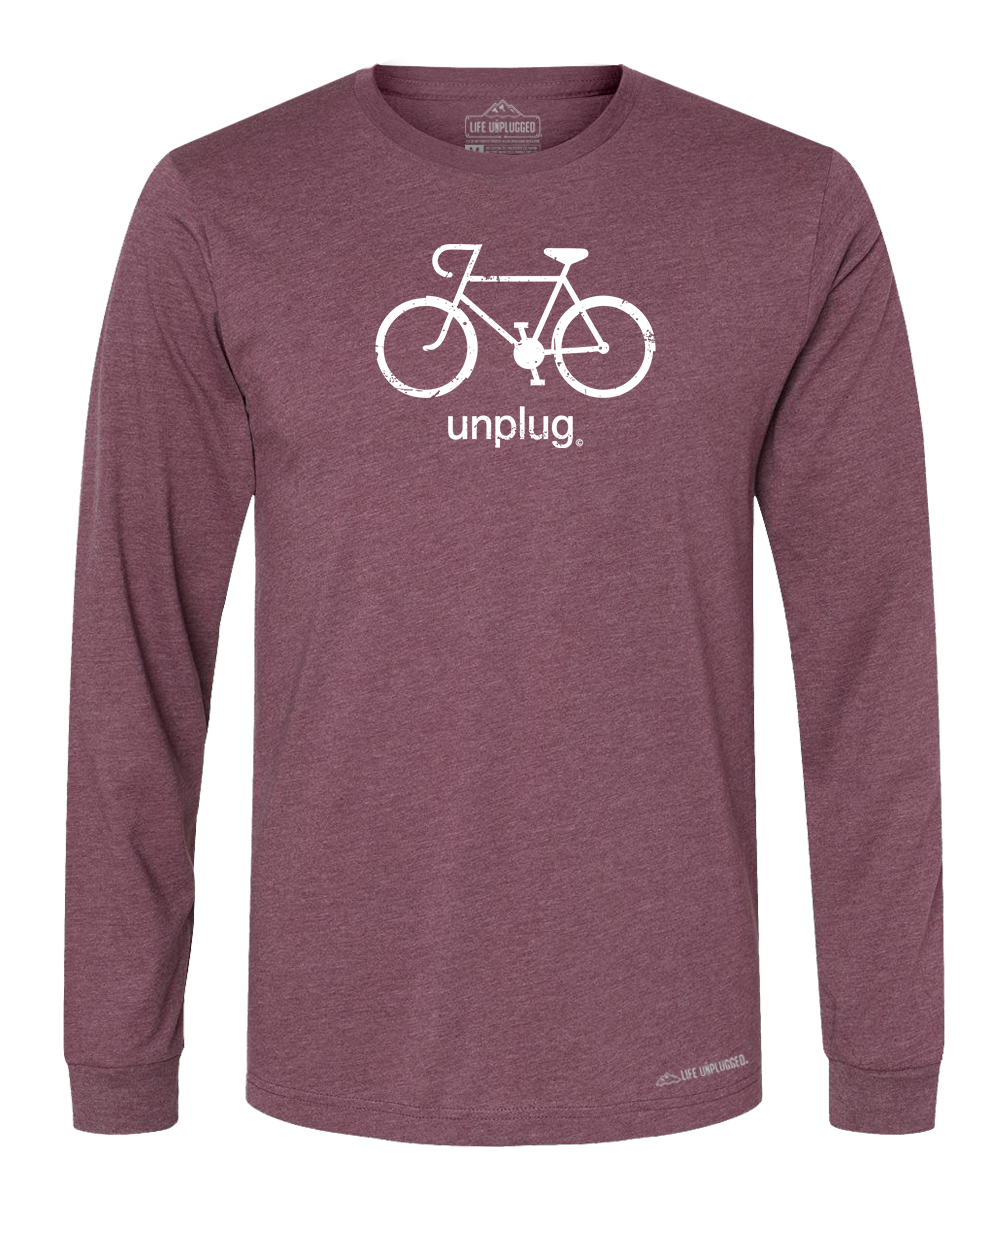 Road Bike Premium Polyblend Long Sleeve T-Shirt